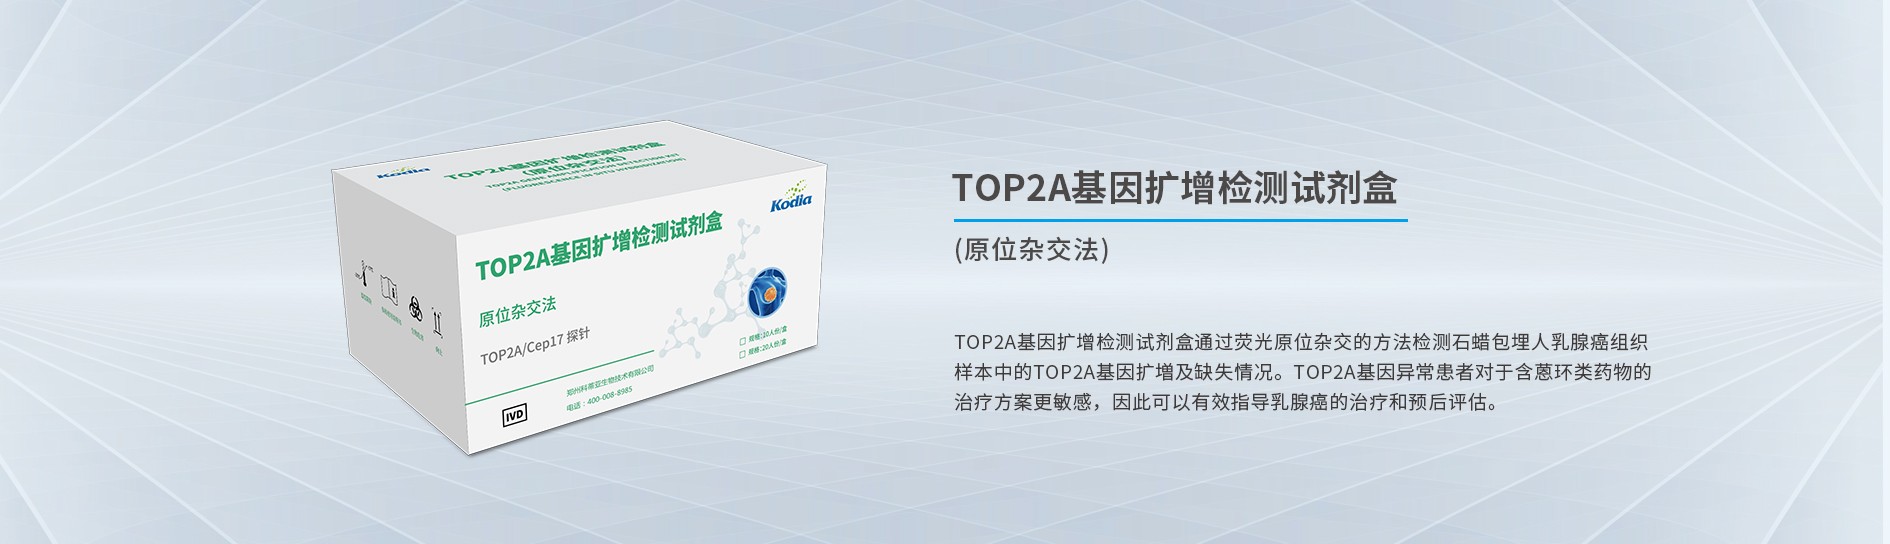 TOP2A基因扩增检测试剂盒(原位杂交法)